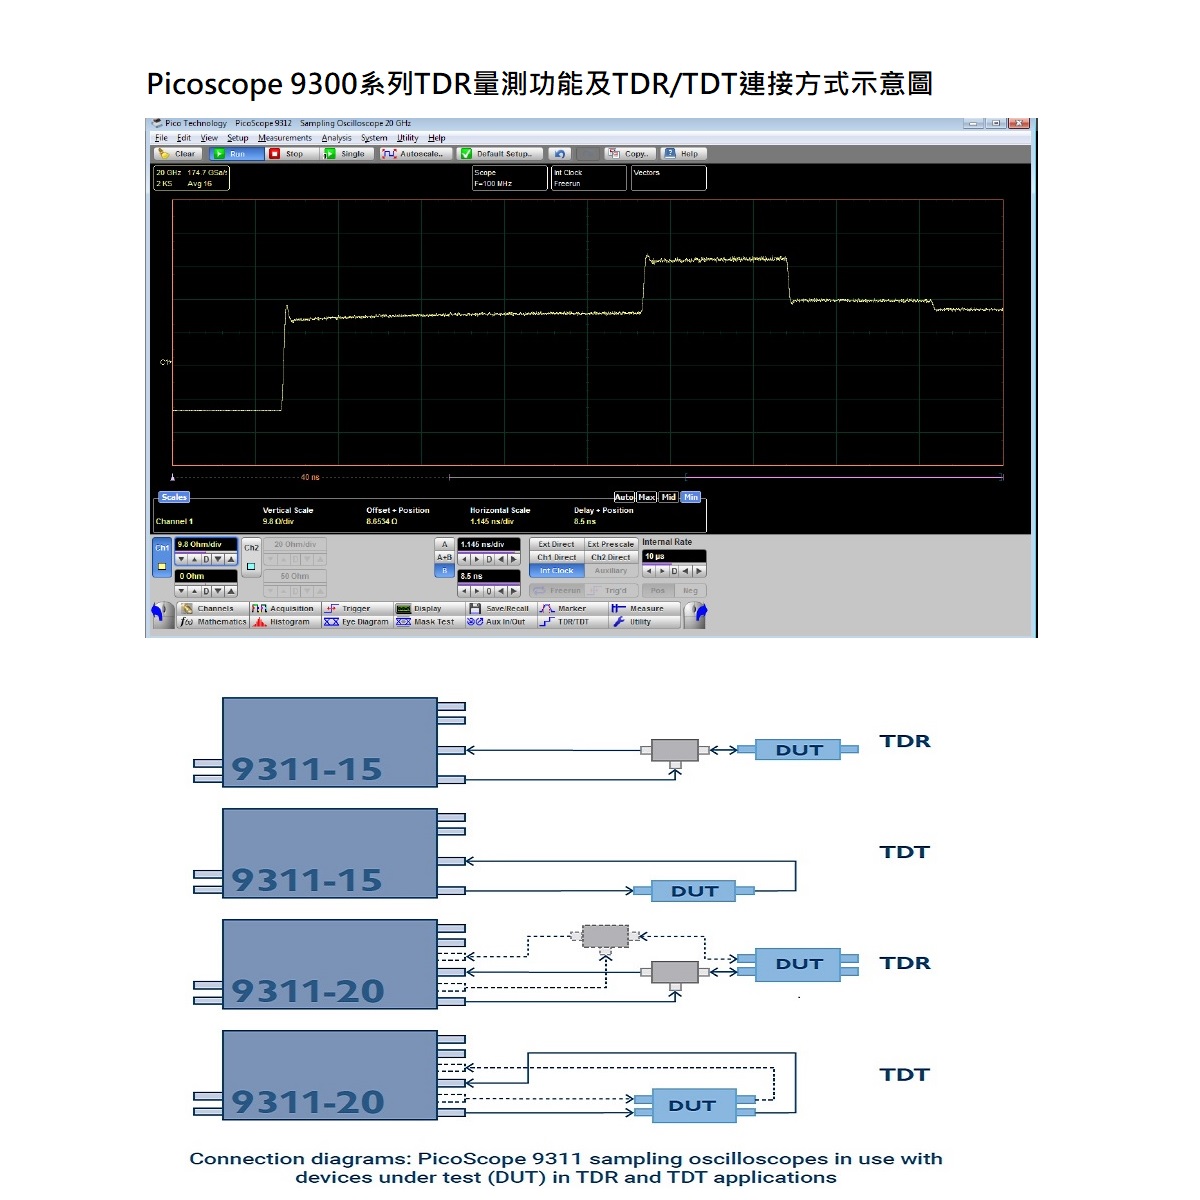 PicoScope 9300 系列TDR測試及各型號TDR/TDT連接圖示